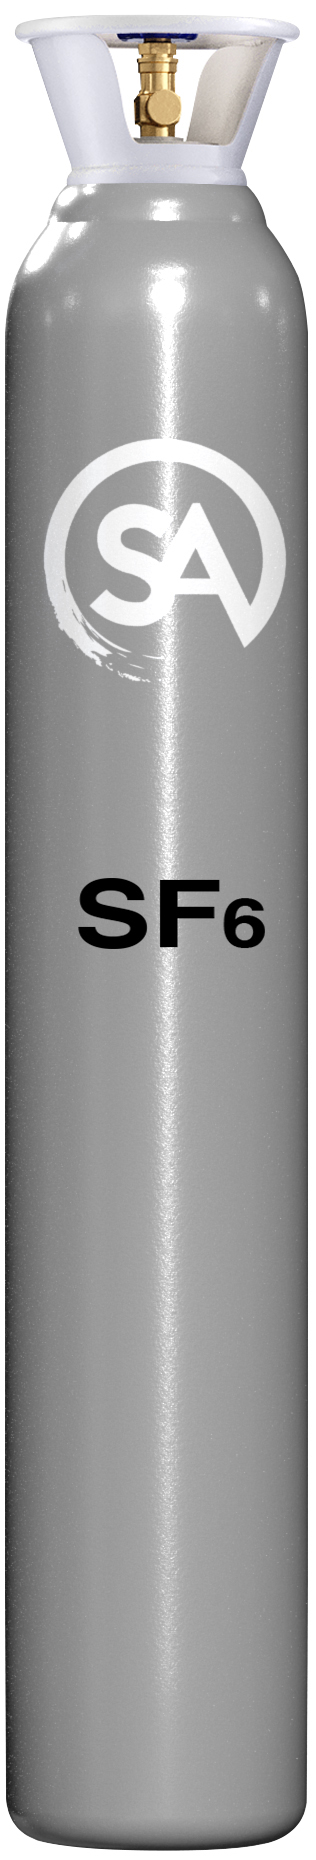 SF6 Sülfürhekzaflorür(%99.9 saflık)